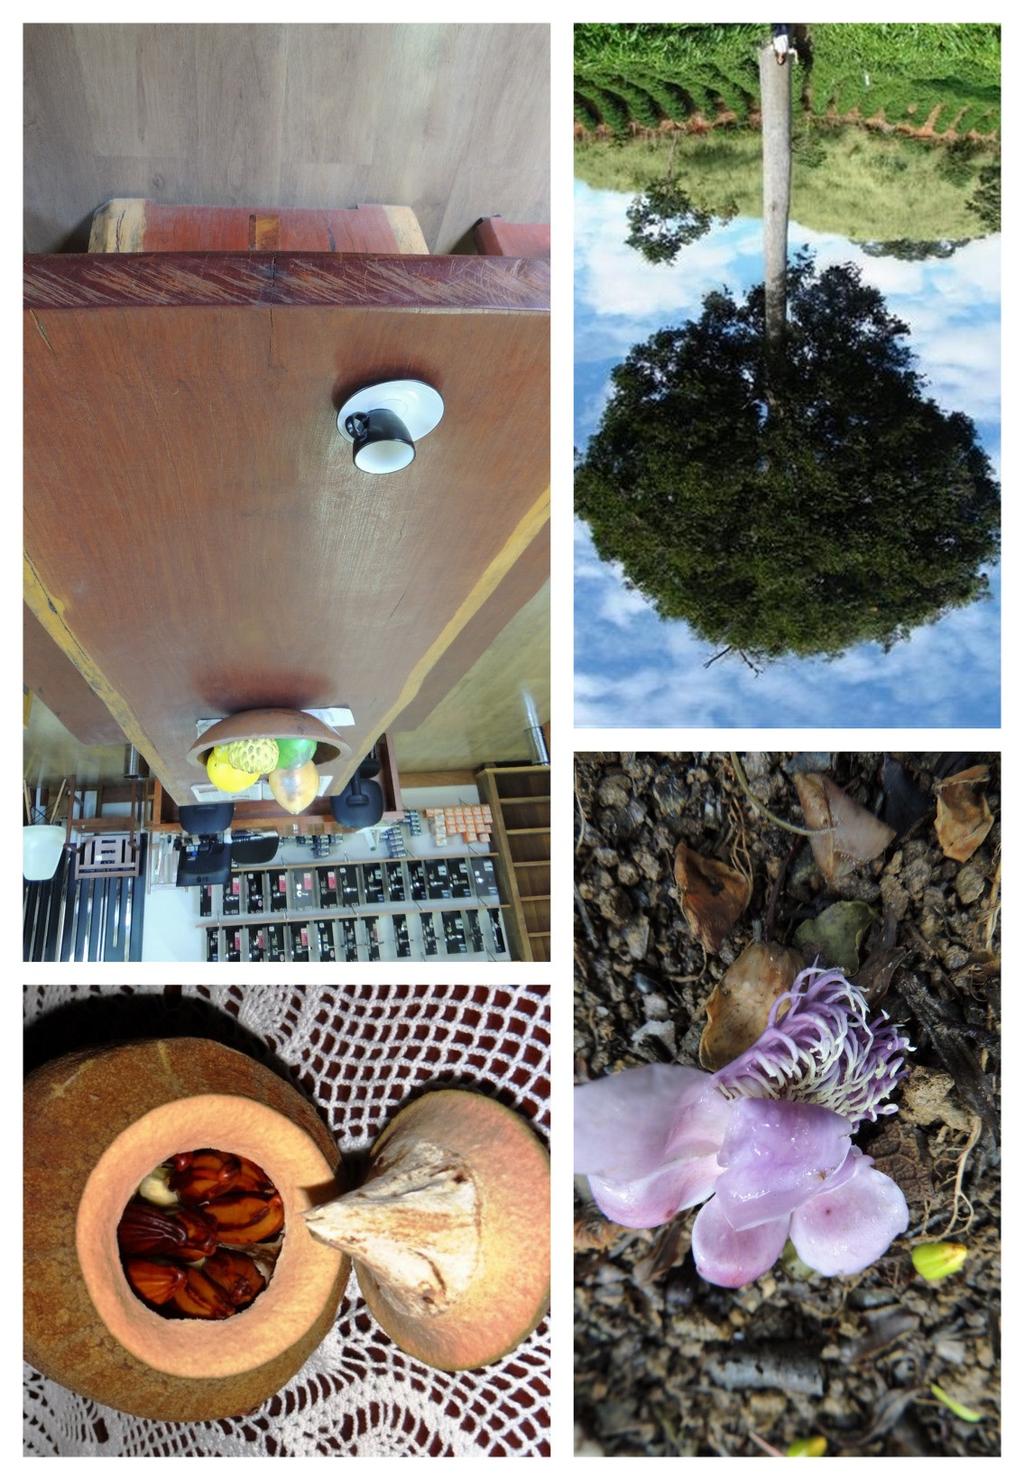 Uso de espécies arbóreas nativas para a propriedade rural e mercado regional na região de Sooretama, ES 7 Foto: